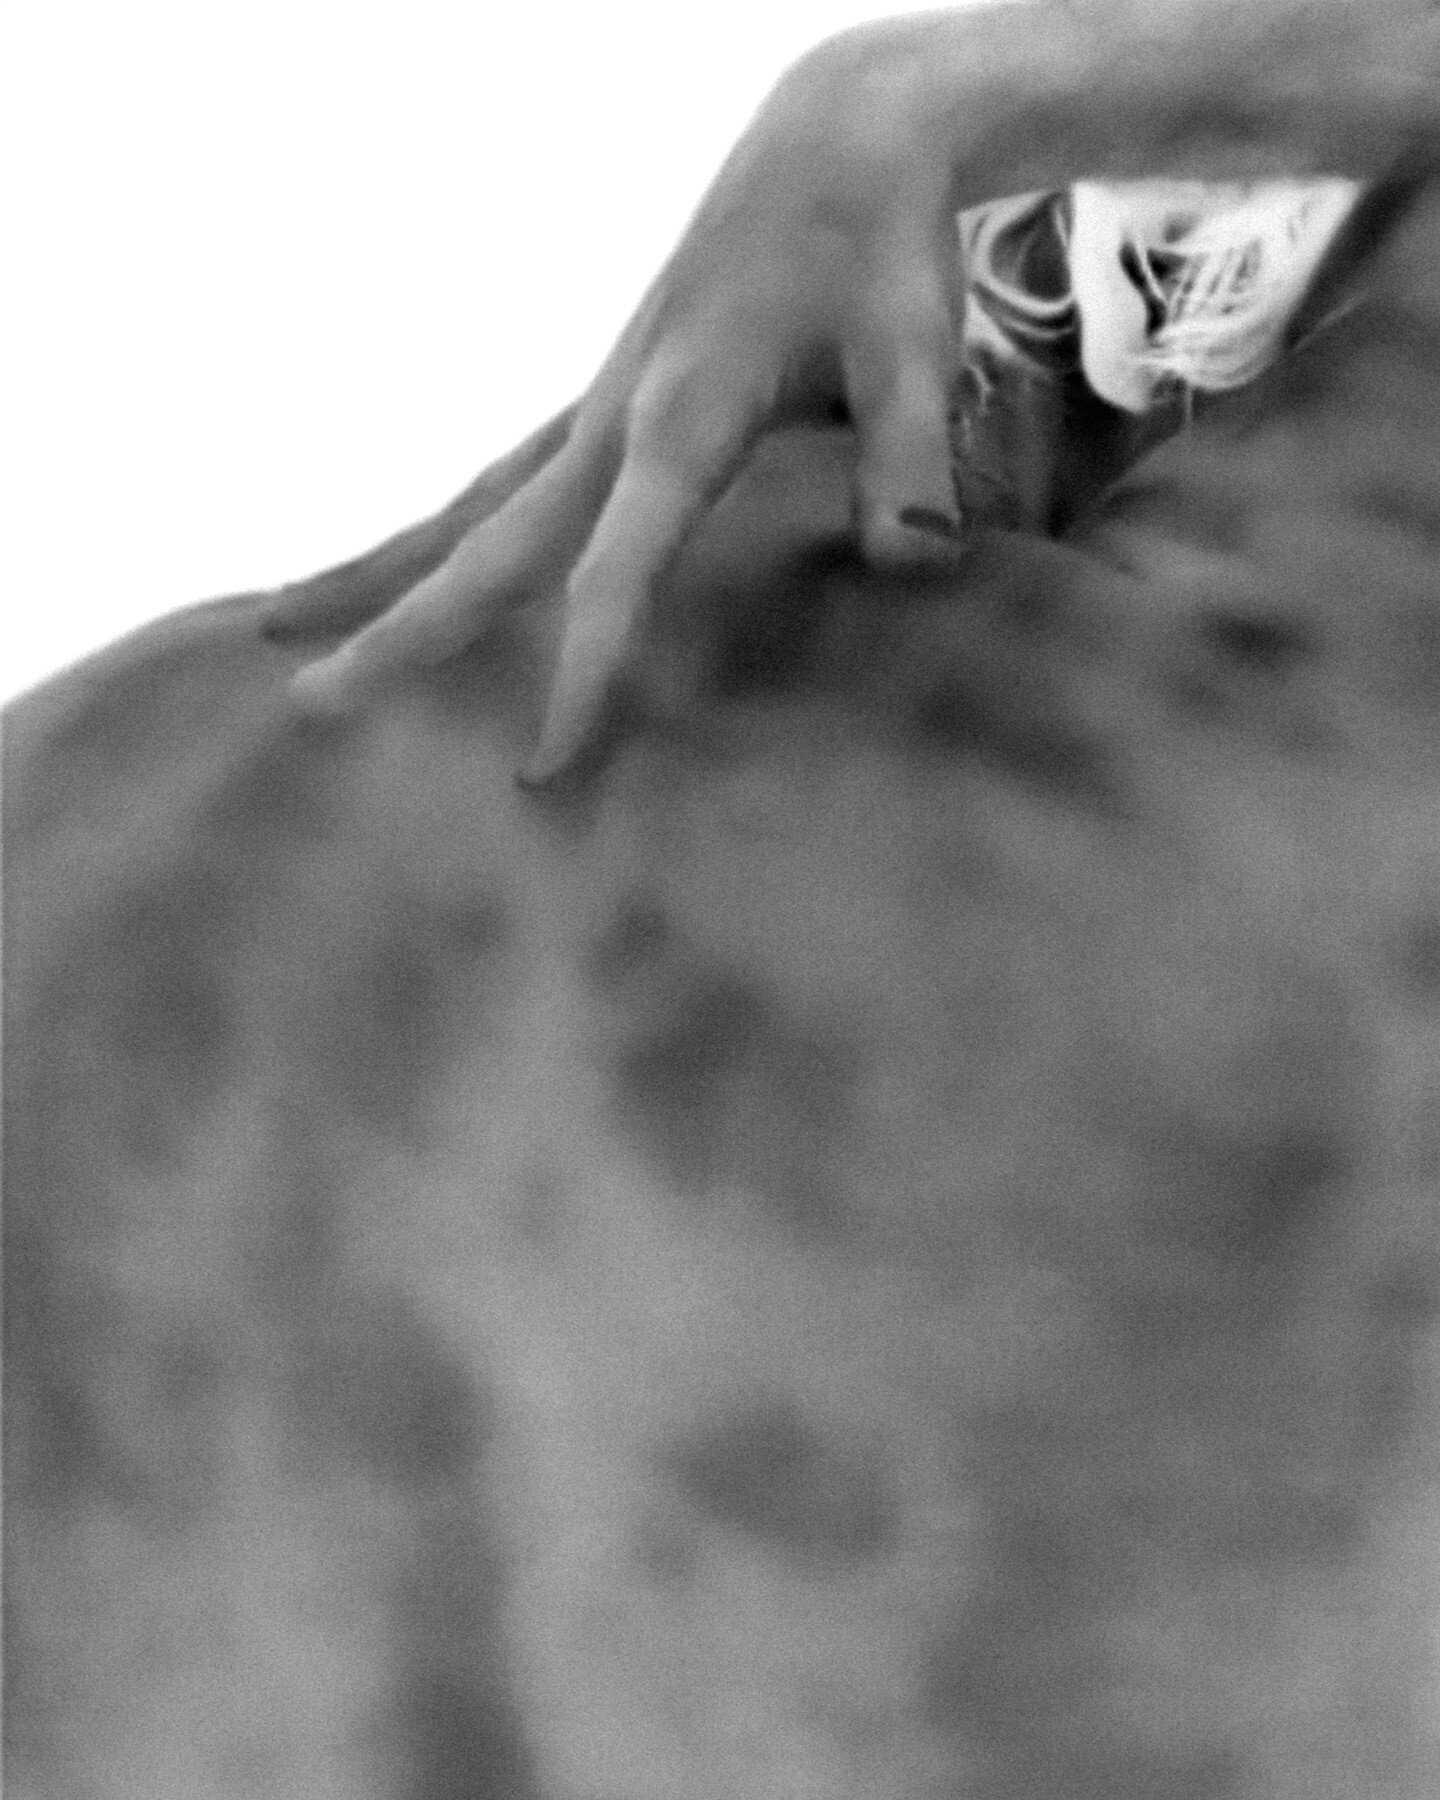 3/12 thermal self portraits

.

.

.

#infraredphotography #infrared_images #thermal #experimentalphotography #experimentalphoto #aestheticphotography #newmedia #newmediaart #newmediaartist #contemporaryart #creativeselfportrait #contemporaryartist #